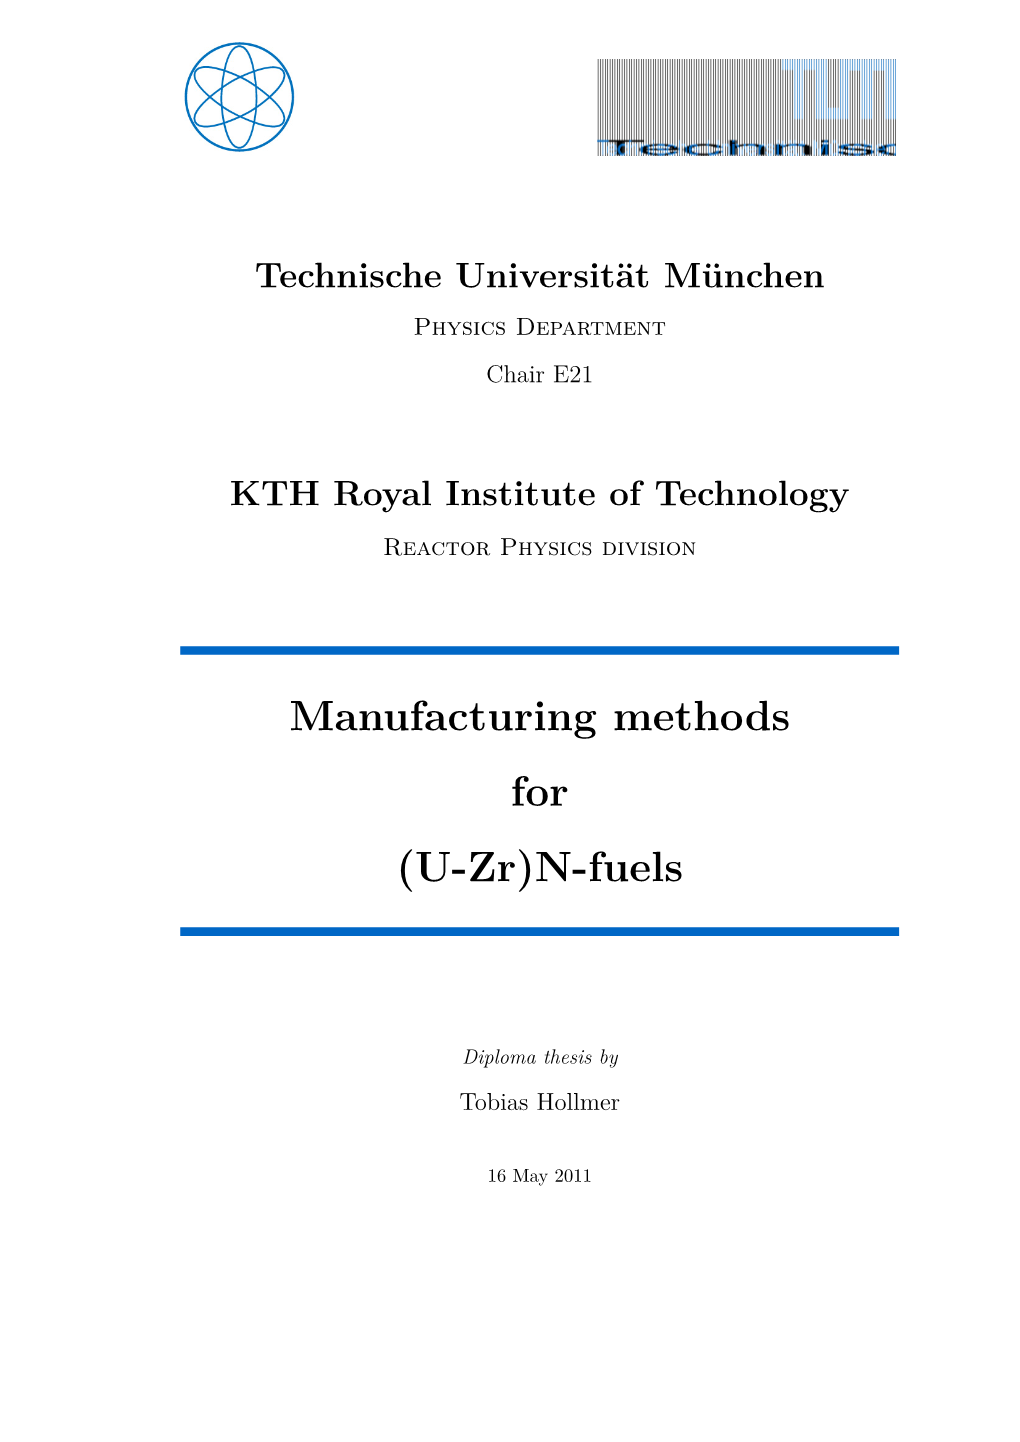 Manufacturing Methods for (U-Zr)N-Fuels